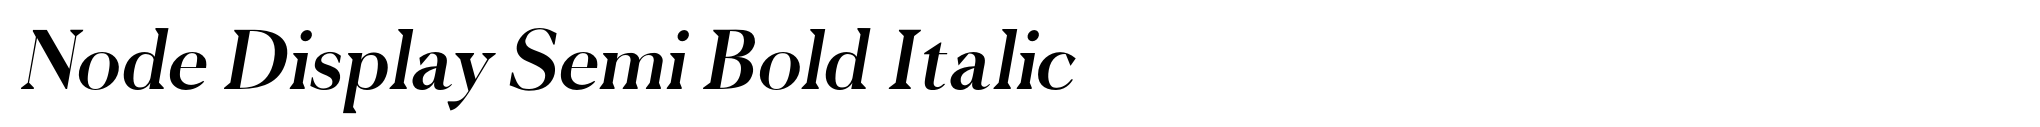 Node Display Semi Bold Italic image